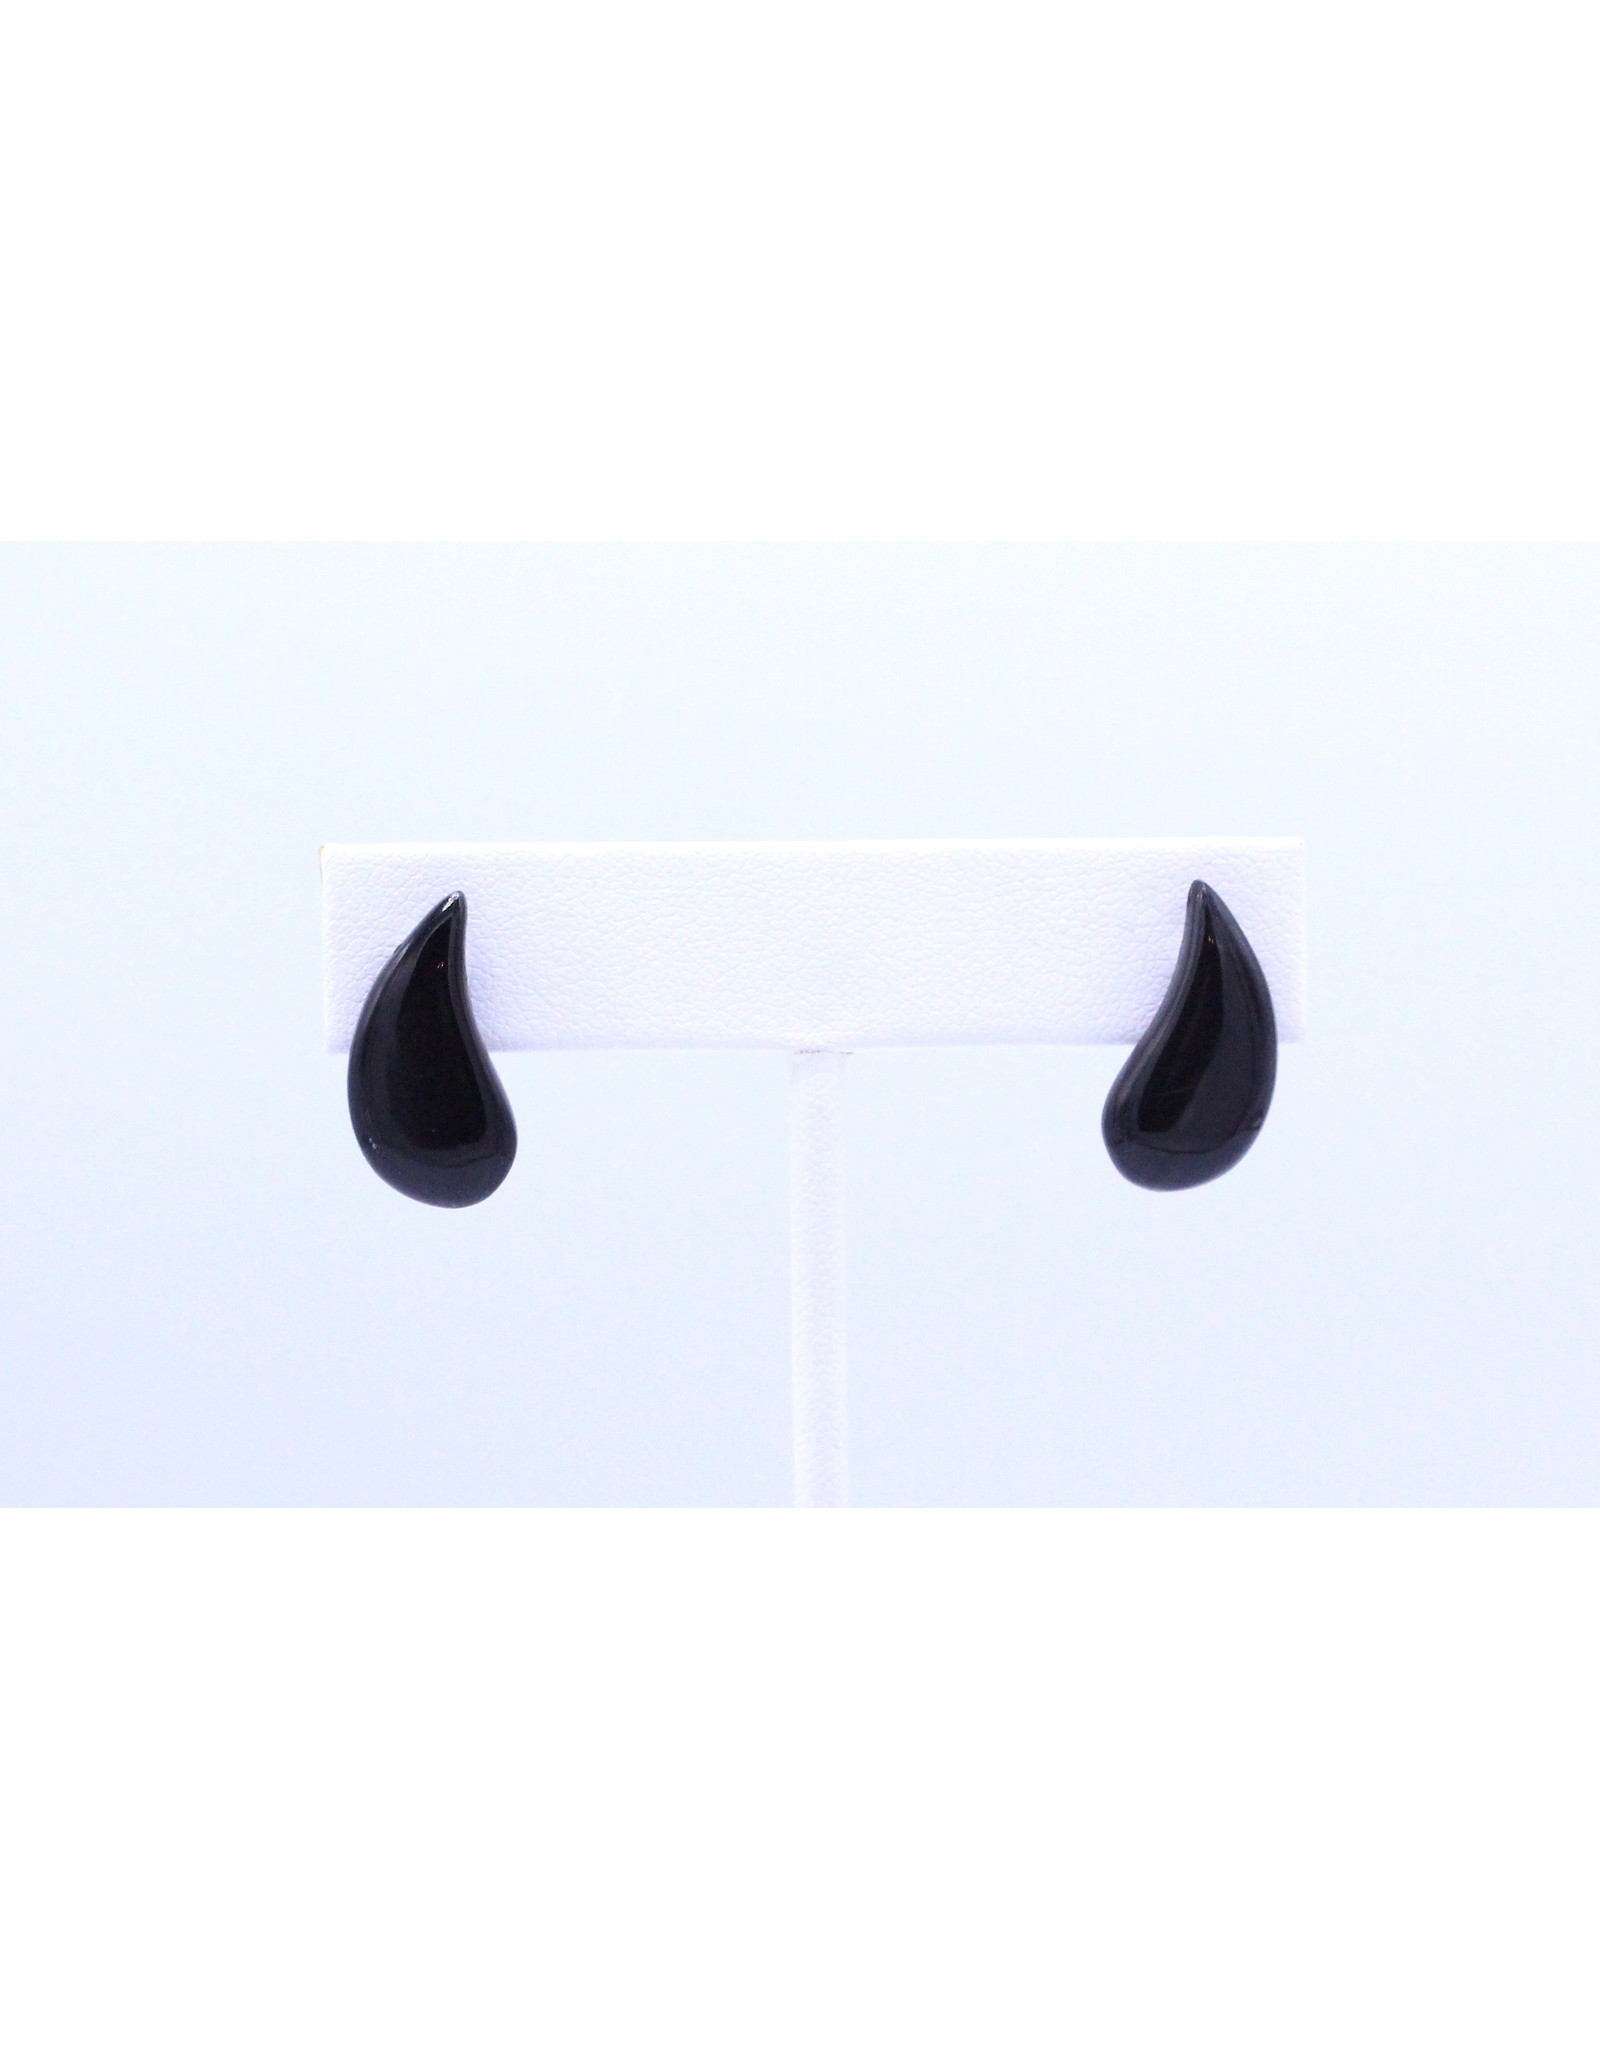 Baleen Stud Earrings by Sandy Maniapik - 5126-5